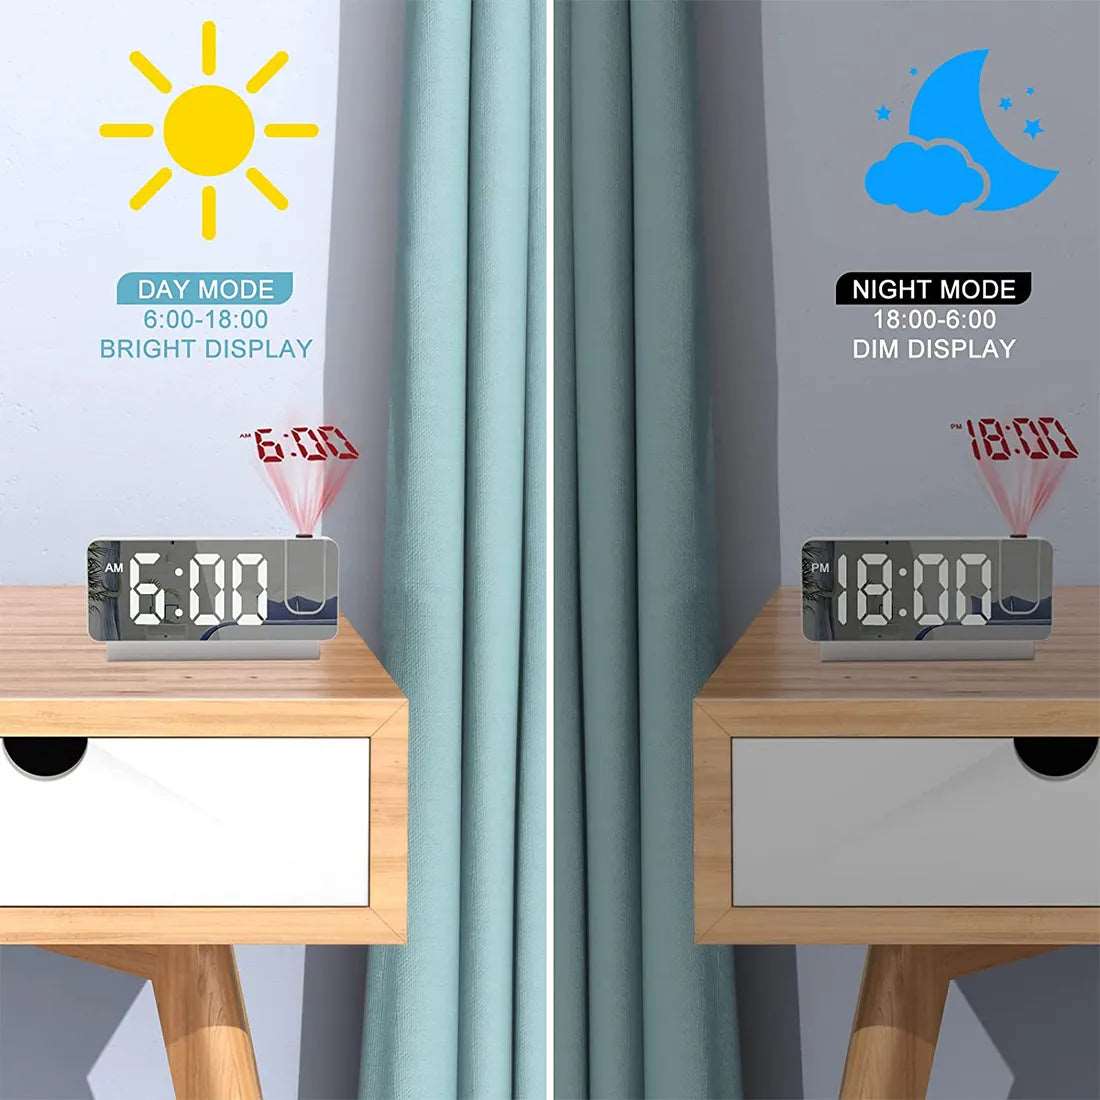 Muvit Projection Digital Alarm Clock For Bedroom